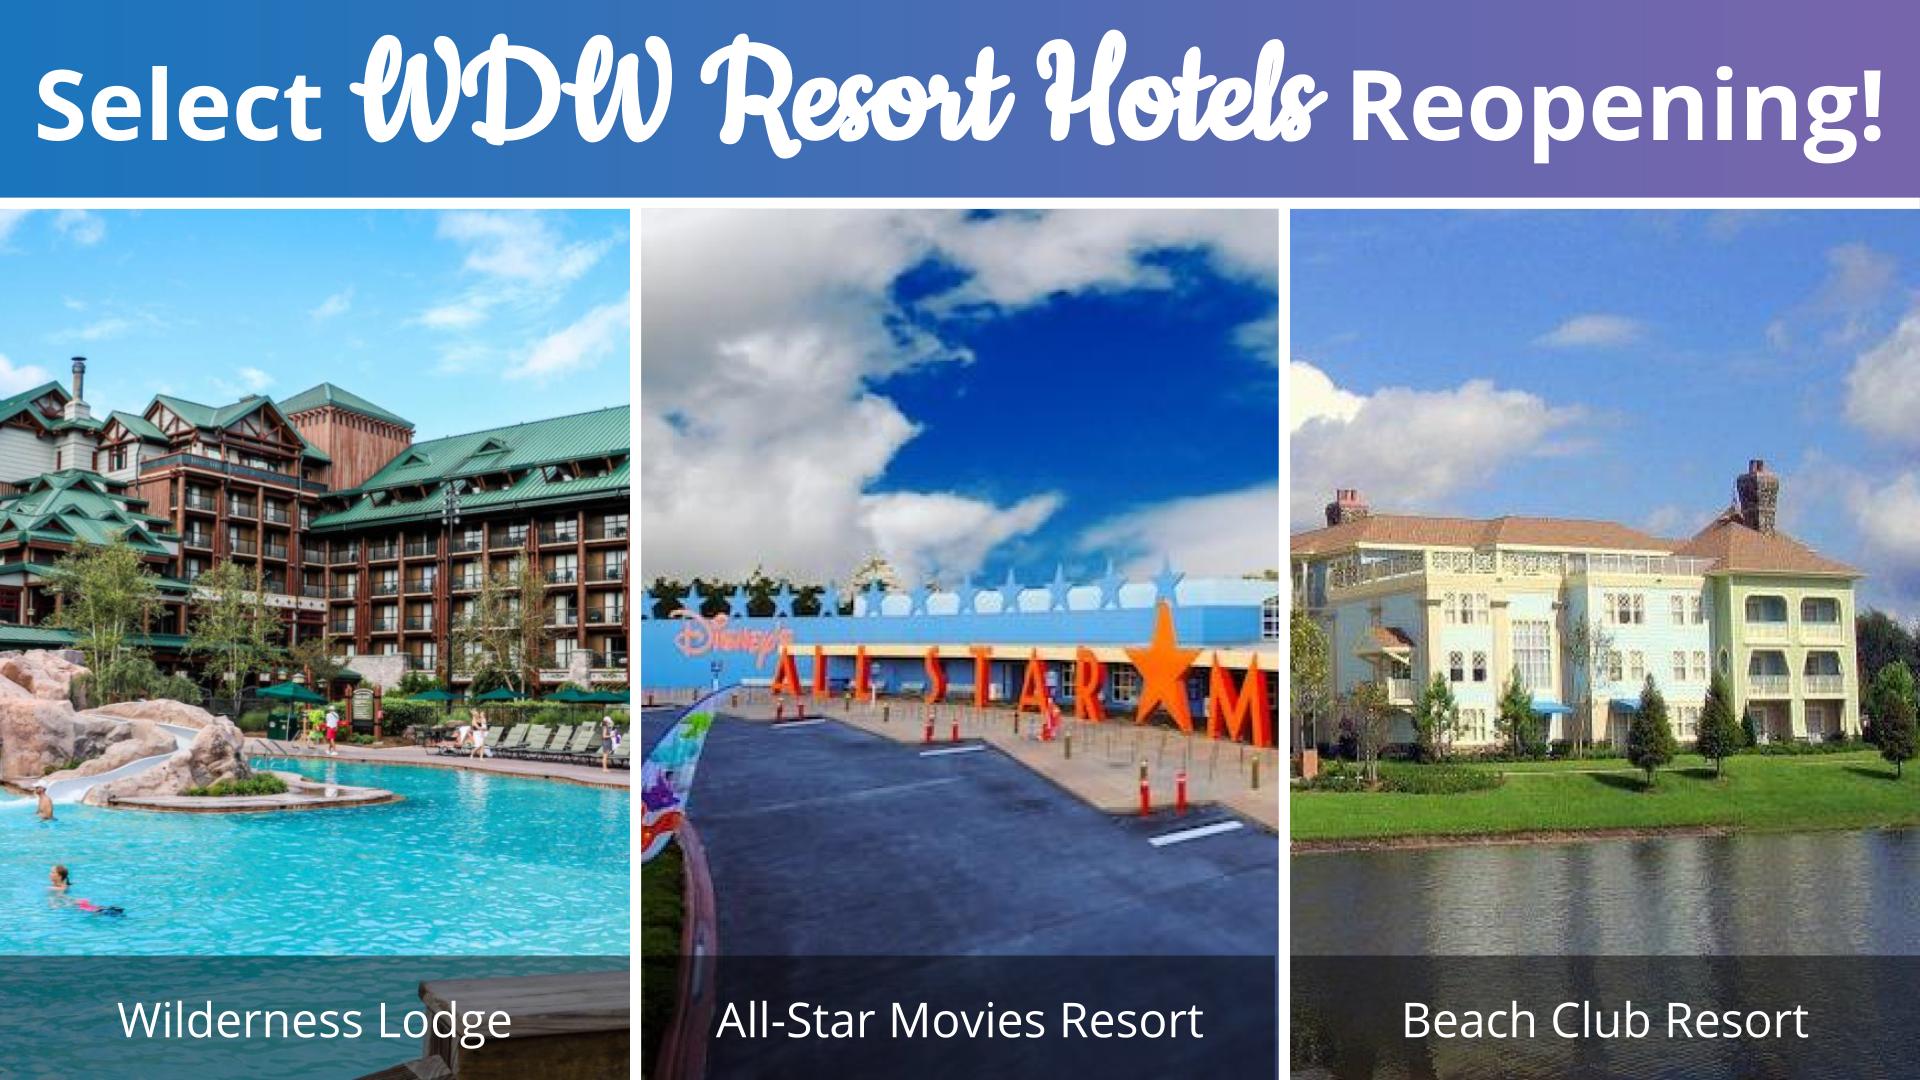 Select Walt Disney World Resort Hotels reopening thumbnail